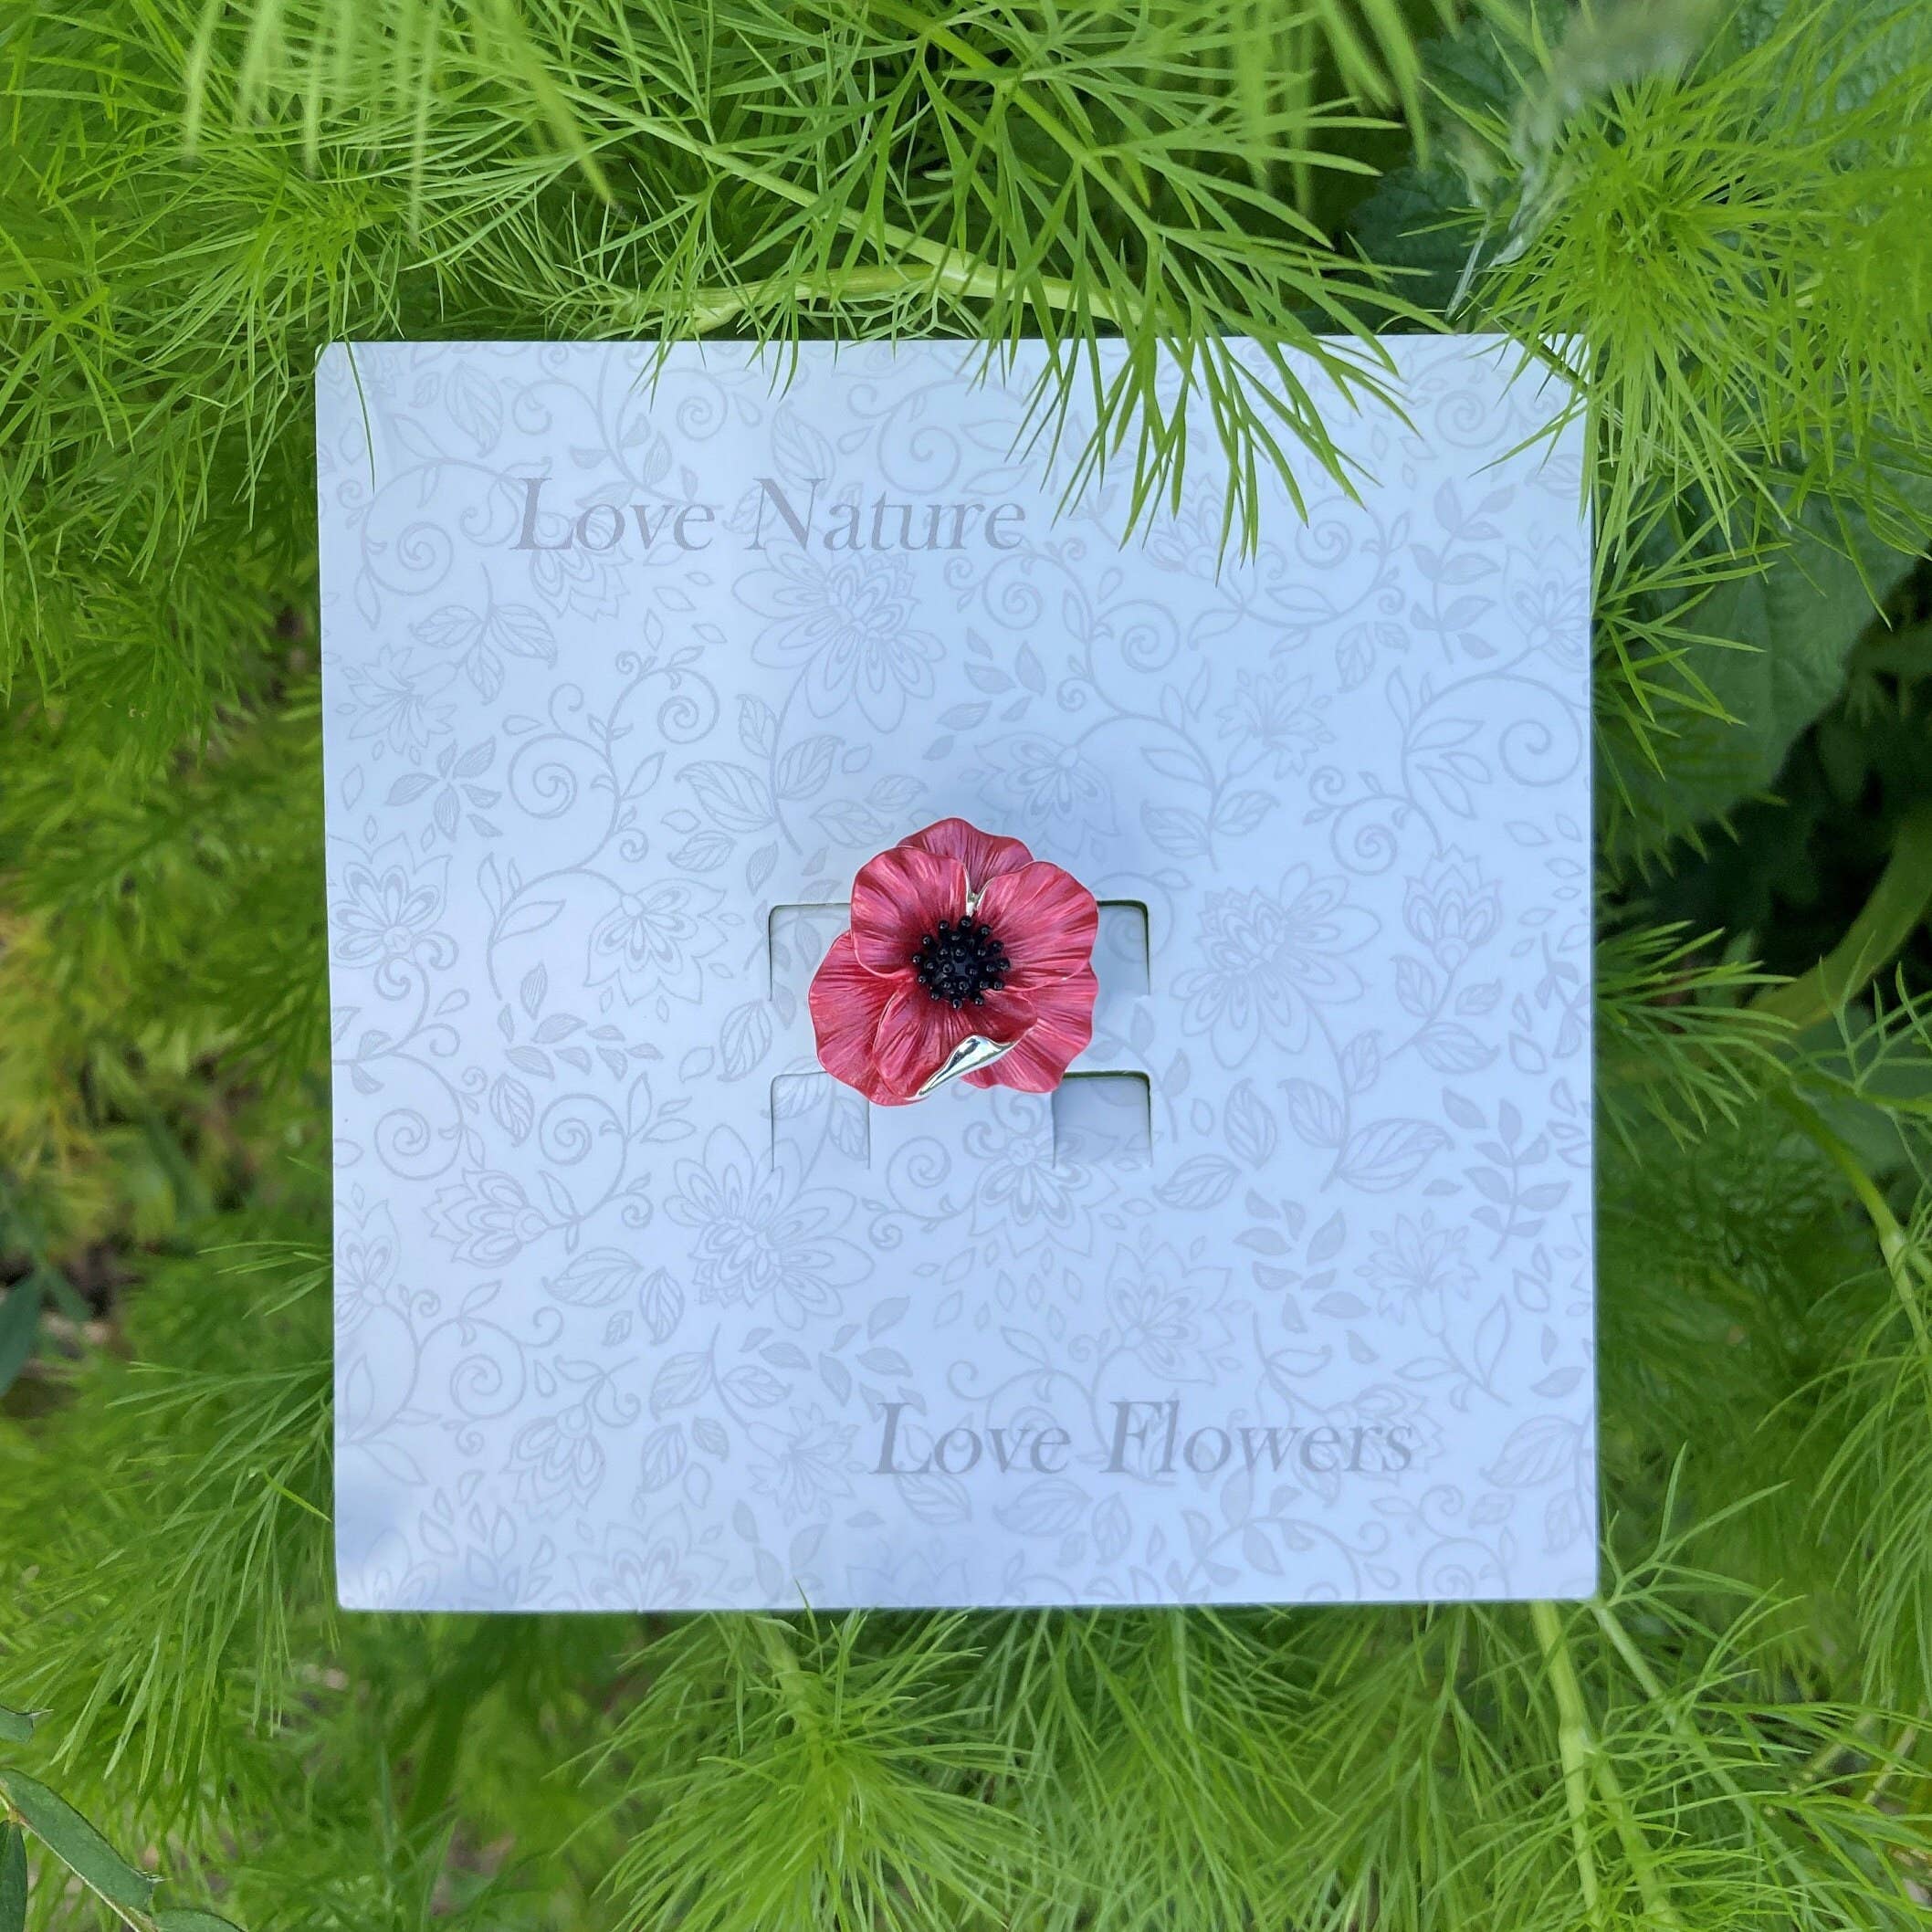 Poppy Red Flower Pin Lapel Brooch